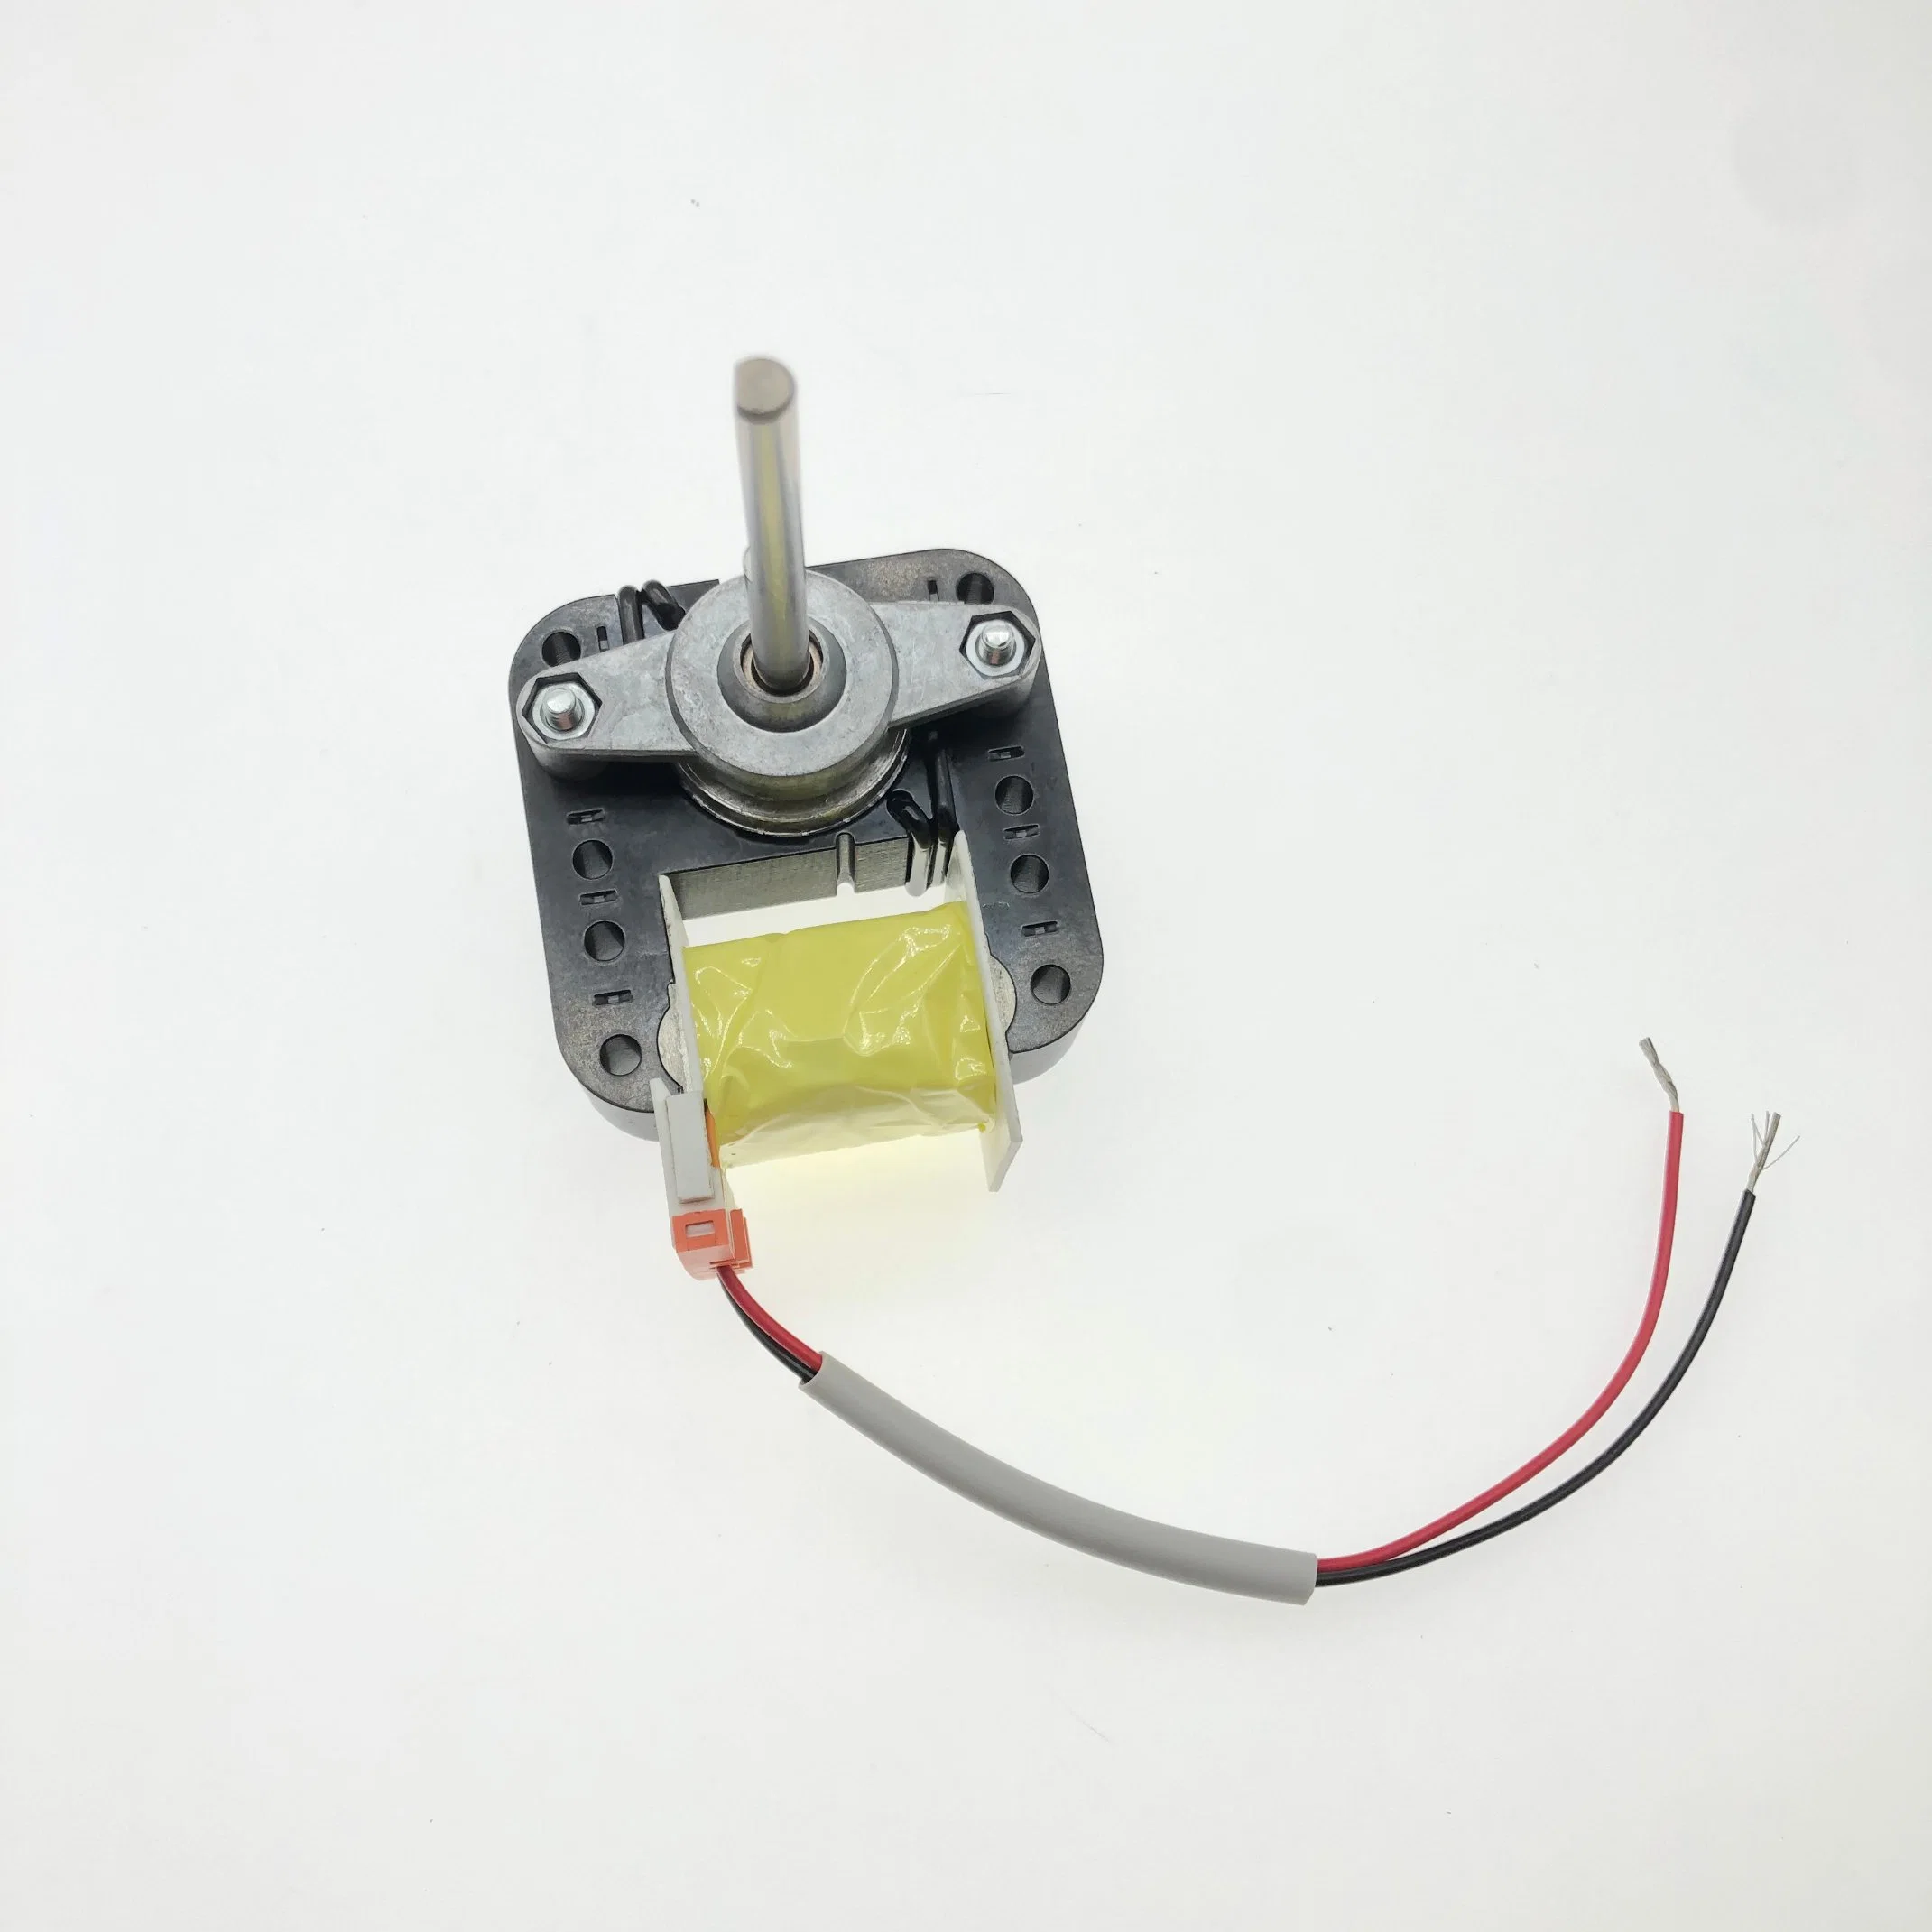 Fan Motor Micro Shaded Pole Motor for Refrigertor Microwave Oven Warmer